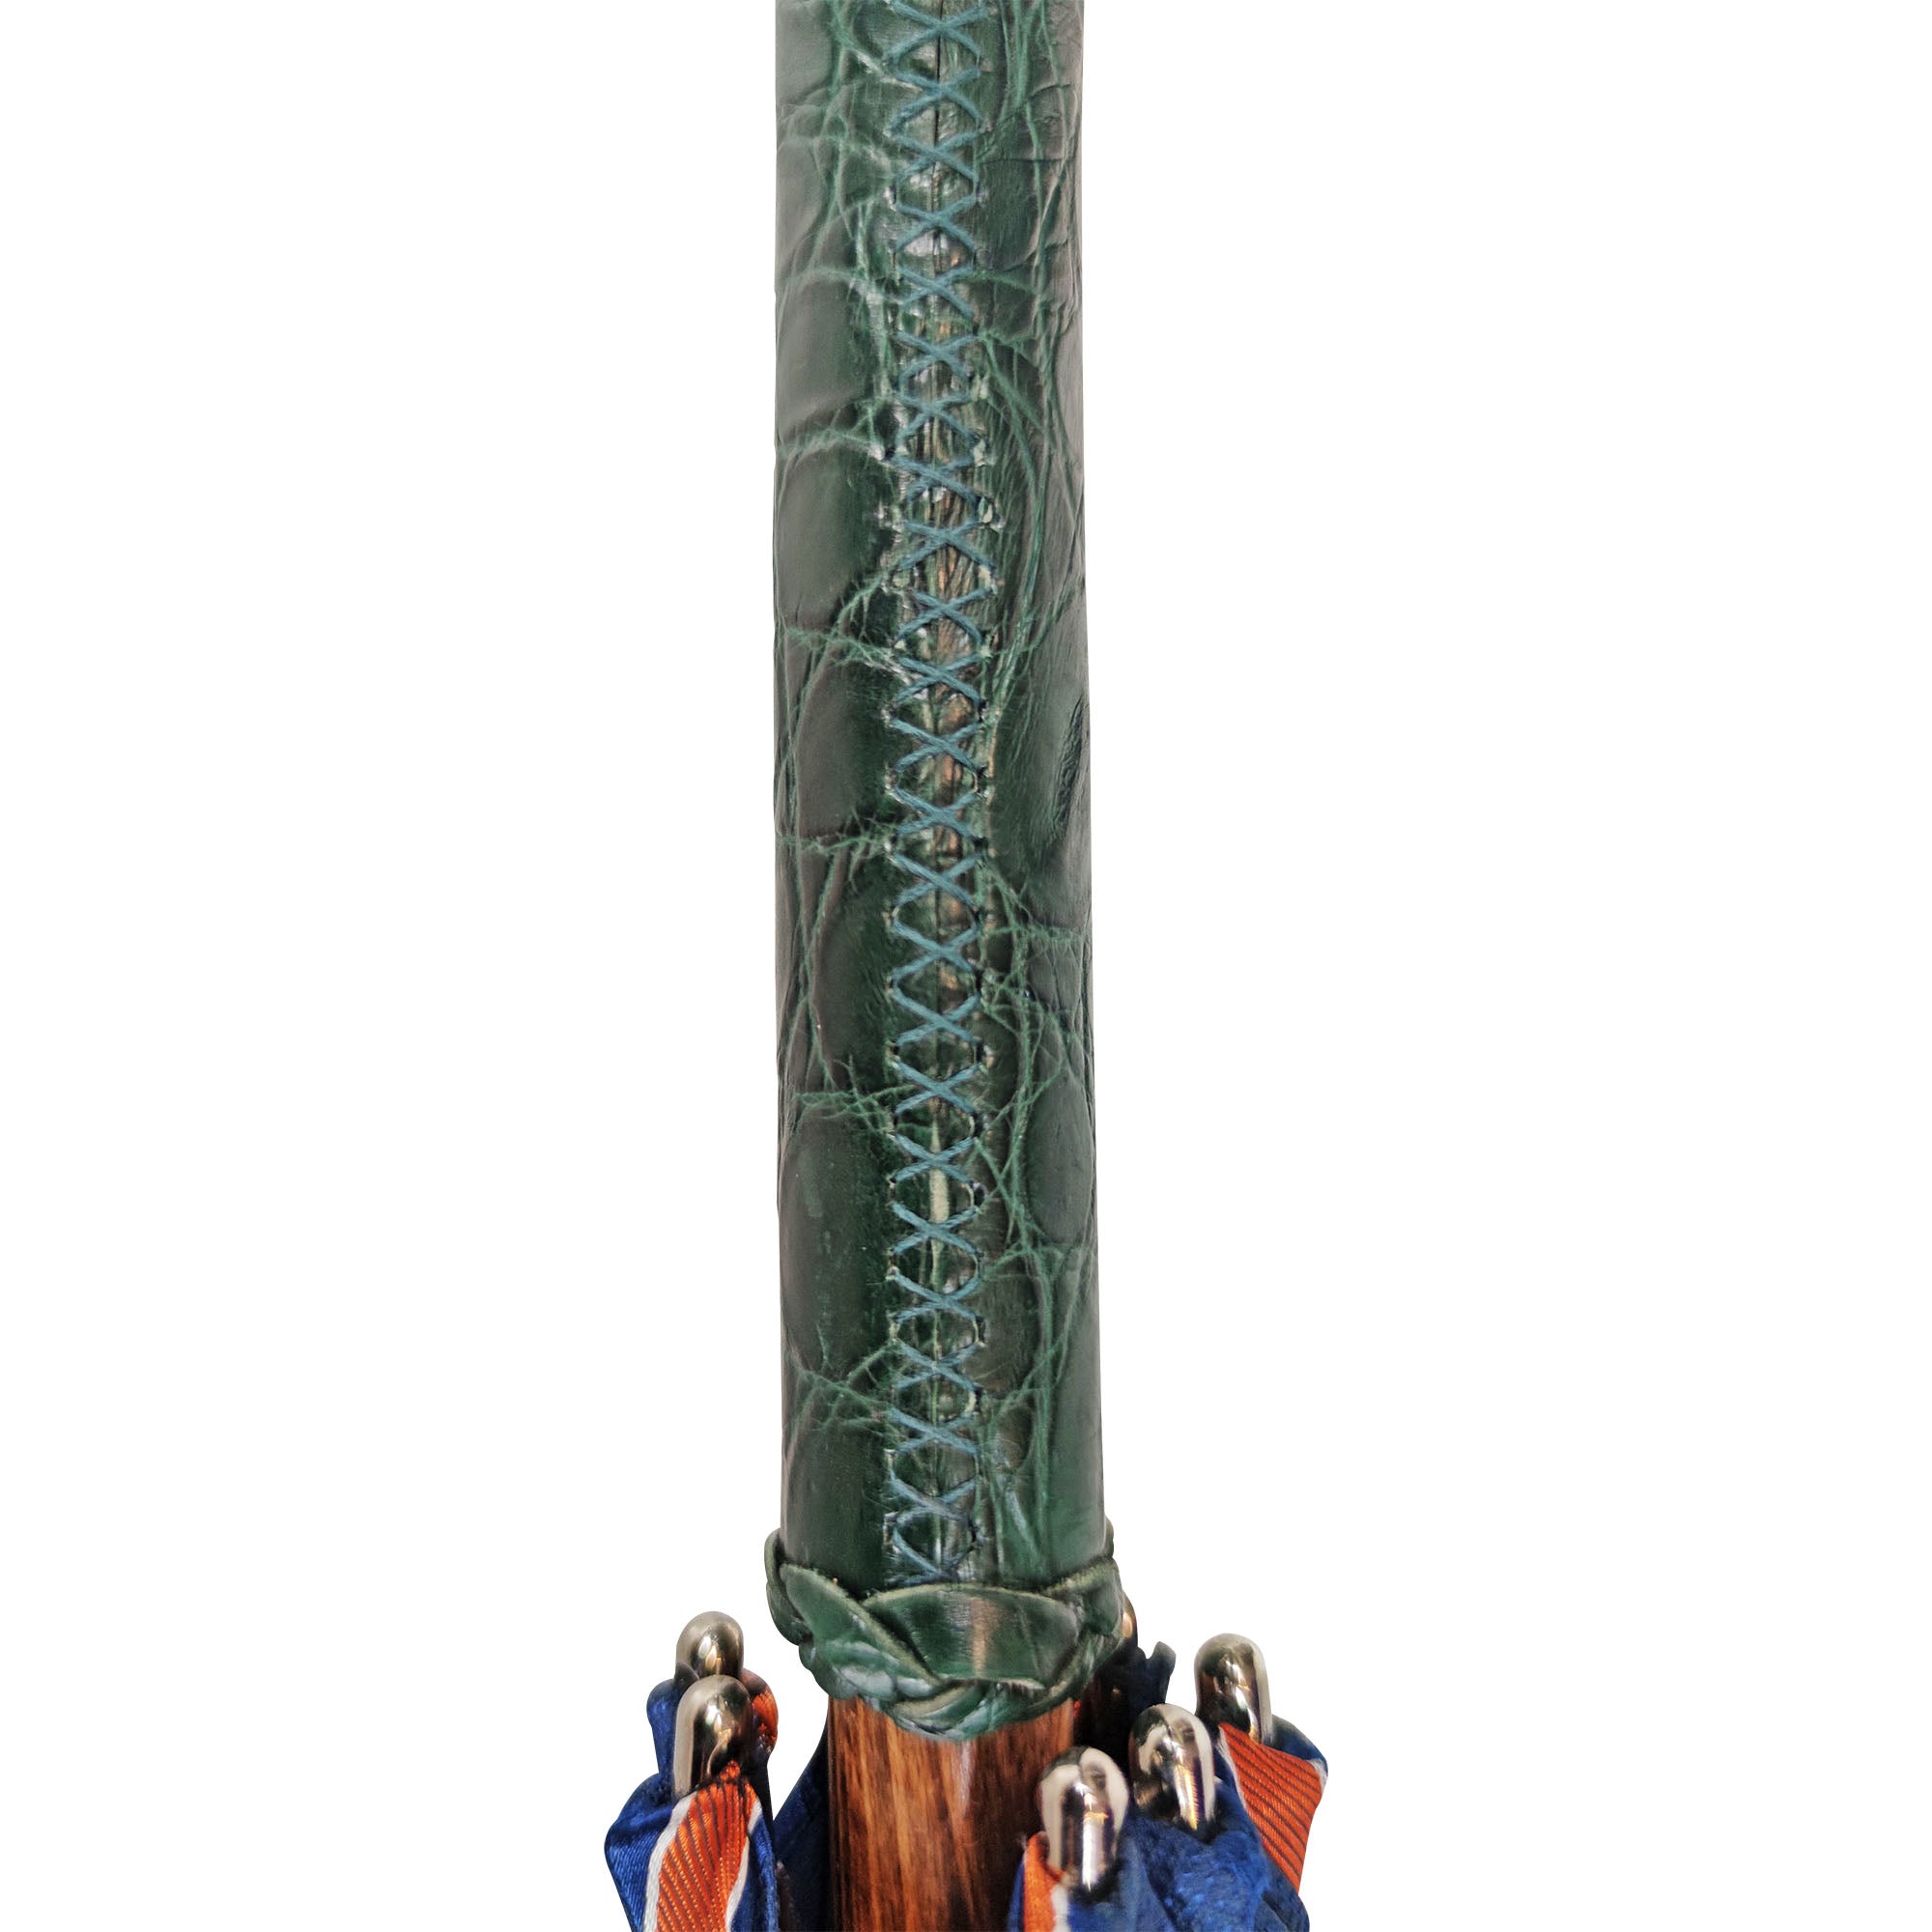 Umbrella with green Caiman Crocodile leather handle